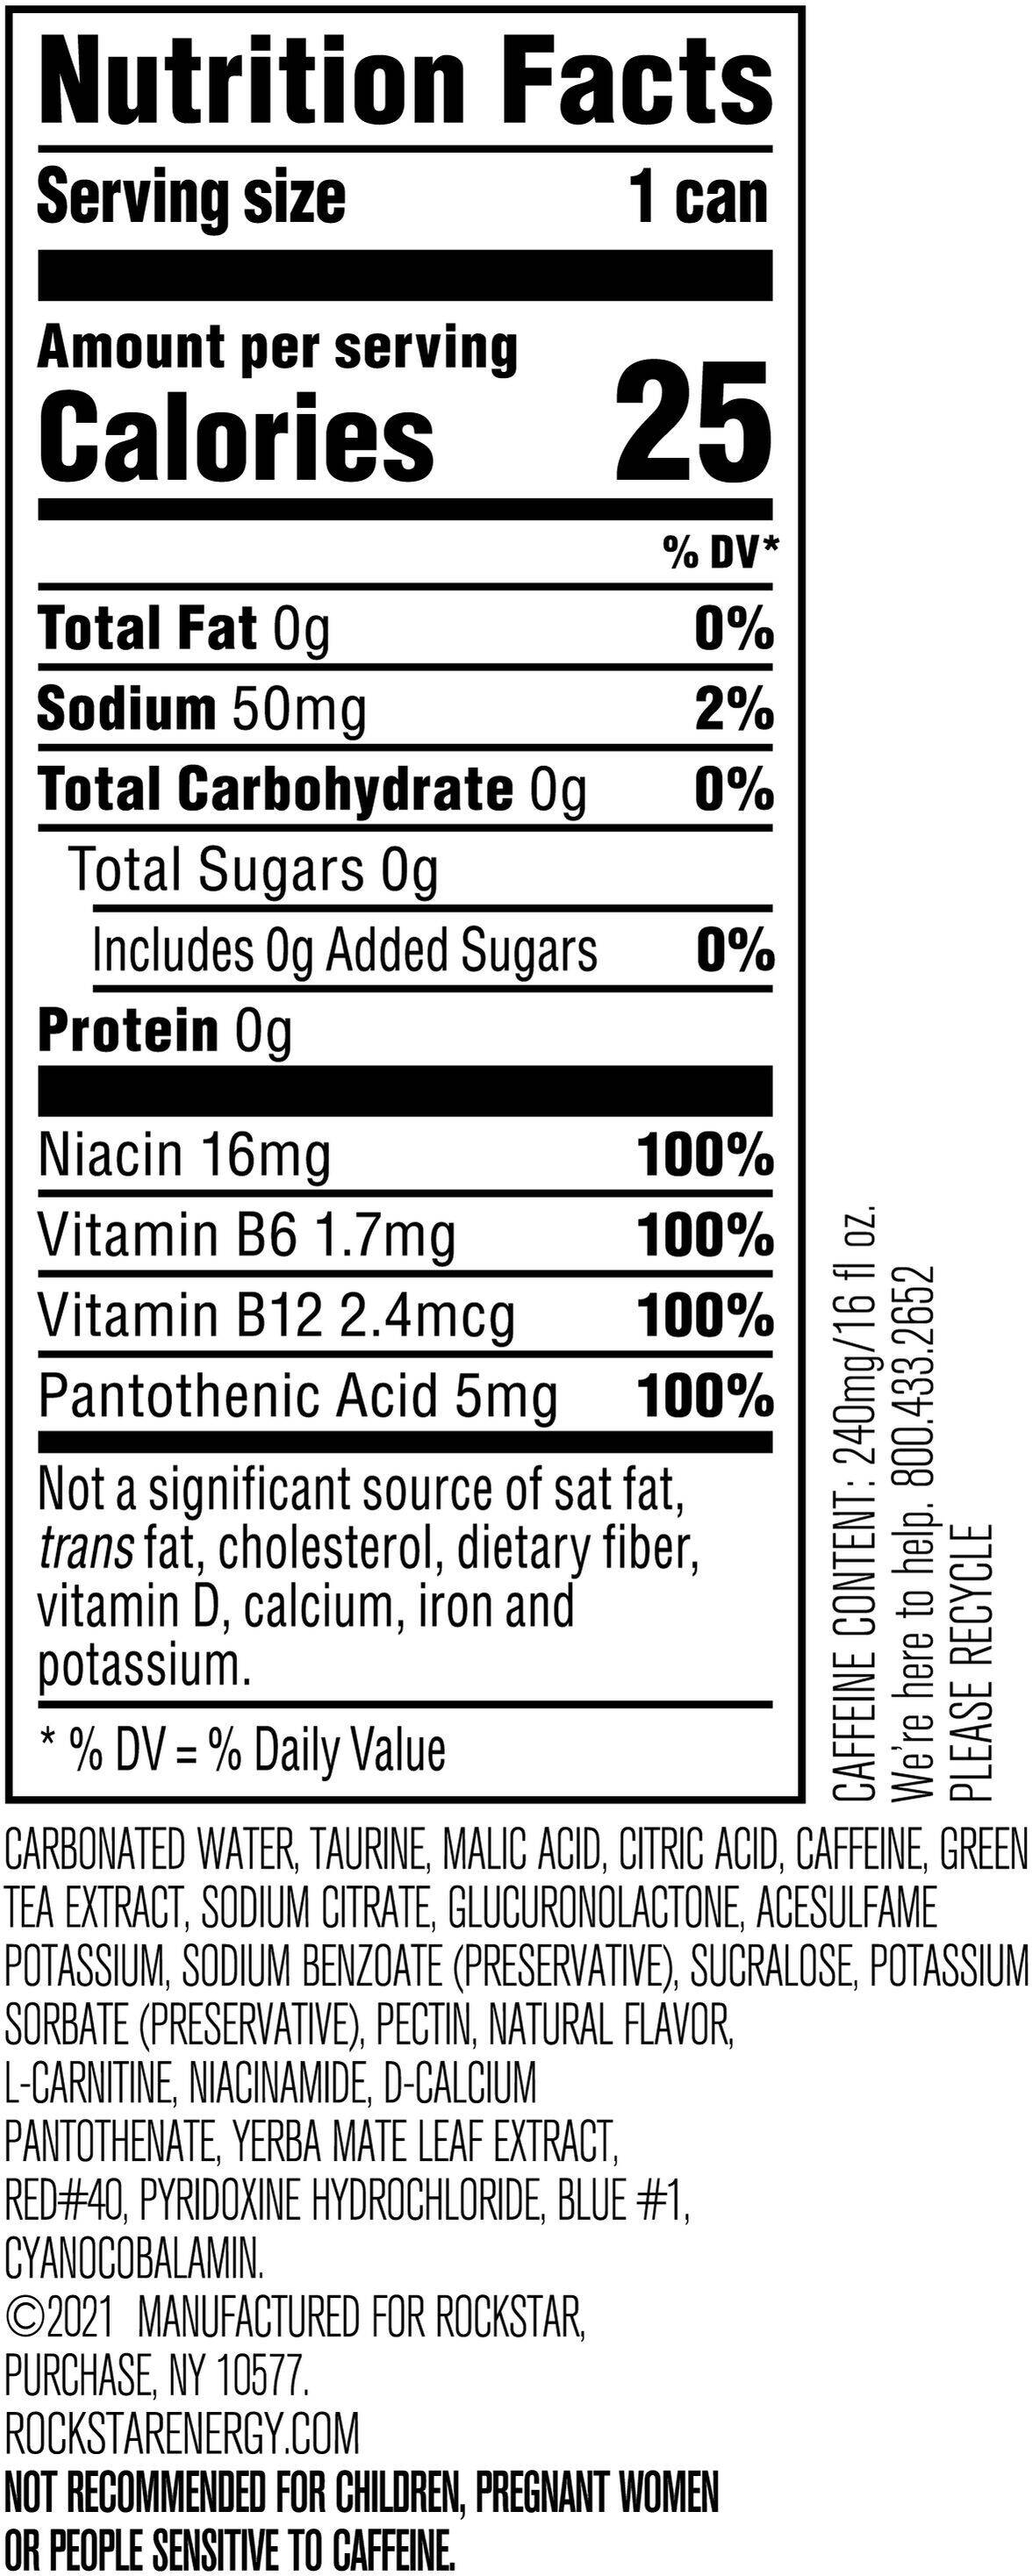 Image describing nutrition information for product Rockstar Zero Carb